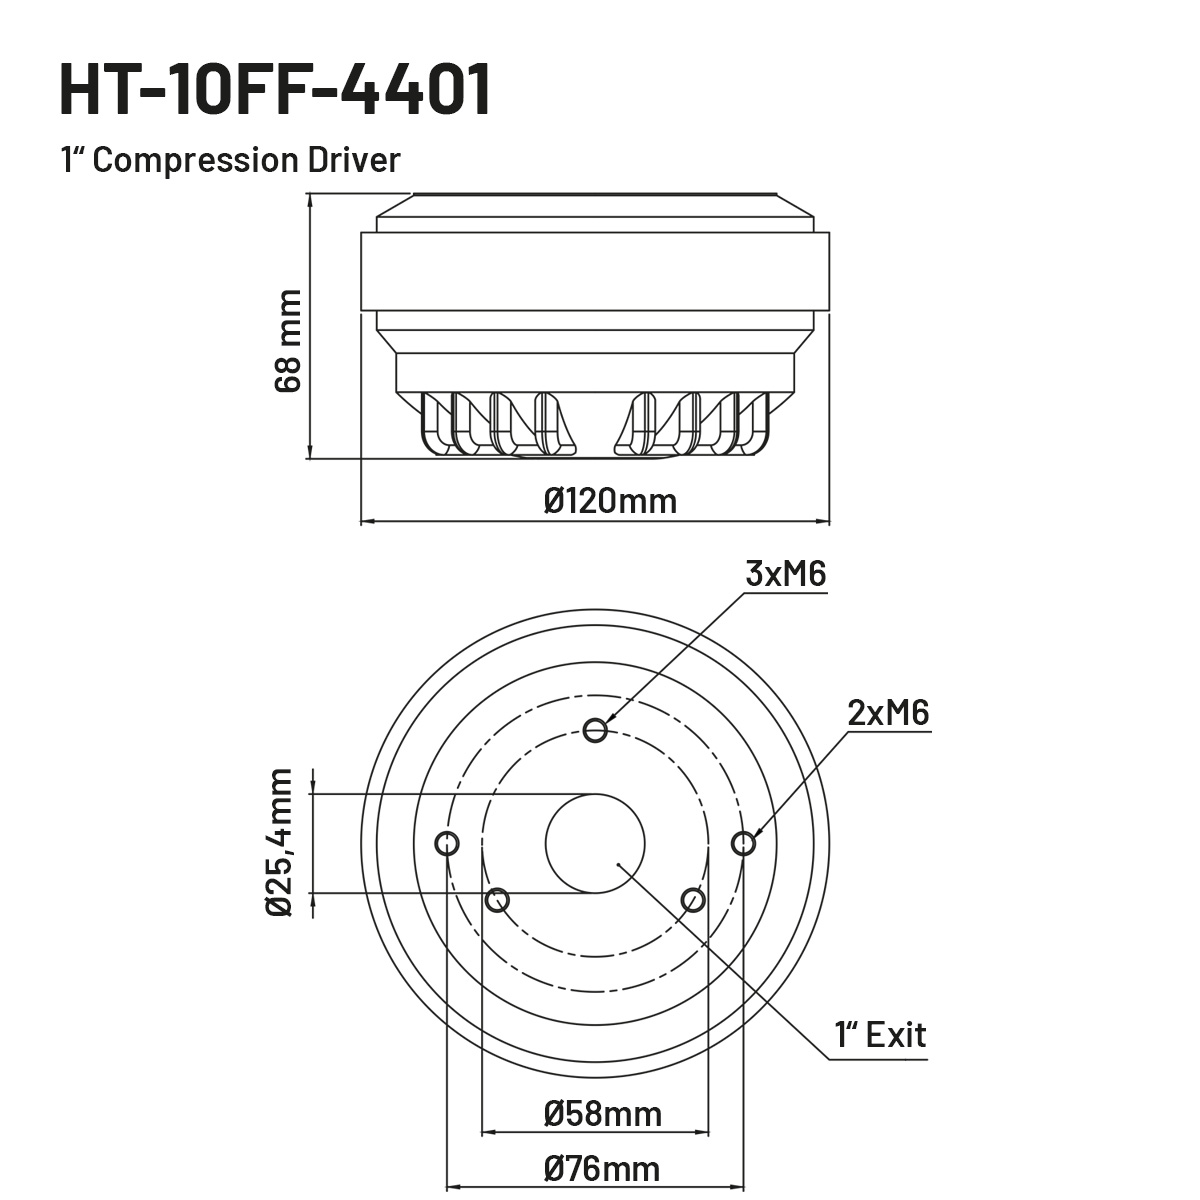 HT-10FF-4401-03